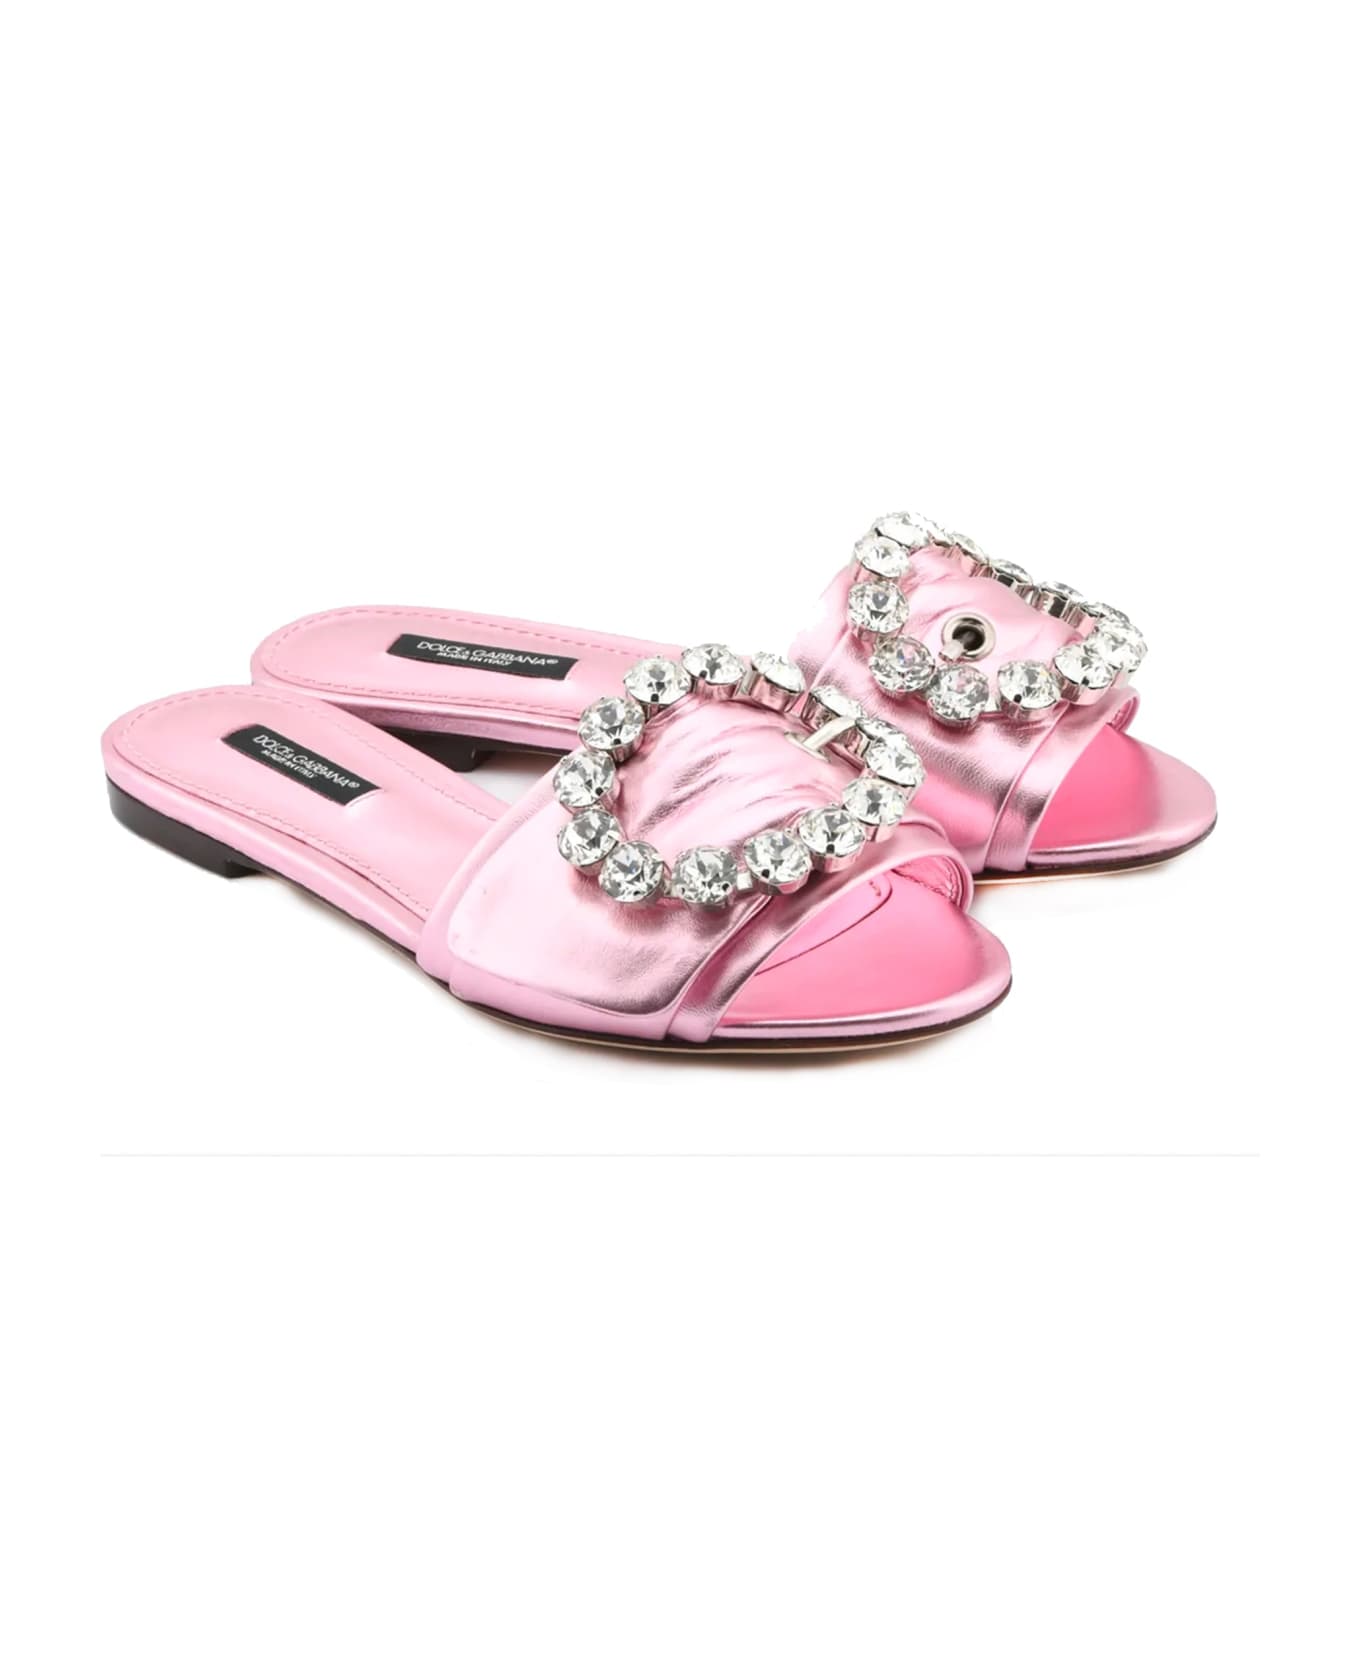 Dolce & Gabbana Crystal Embellished Flats - Pink サンダル